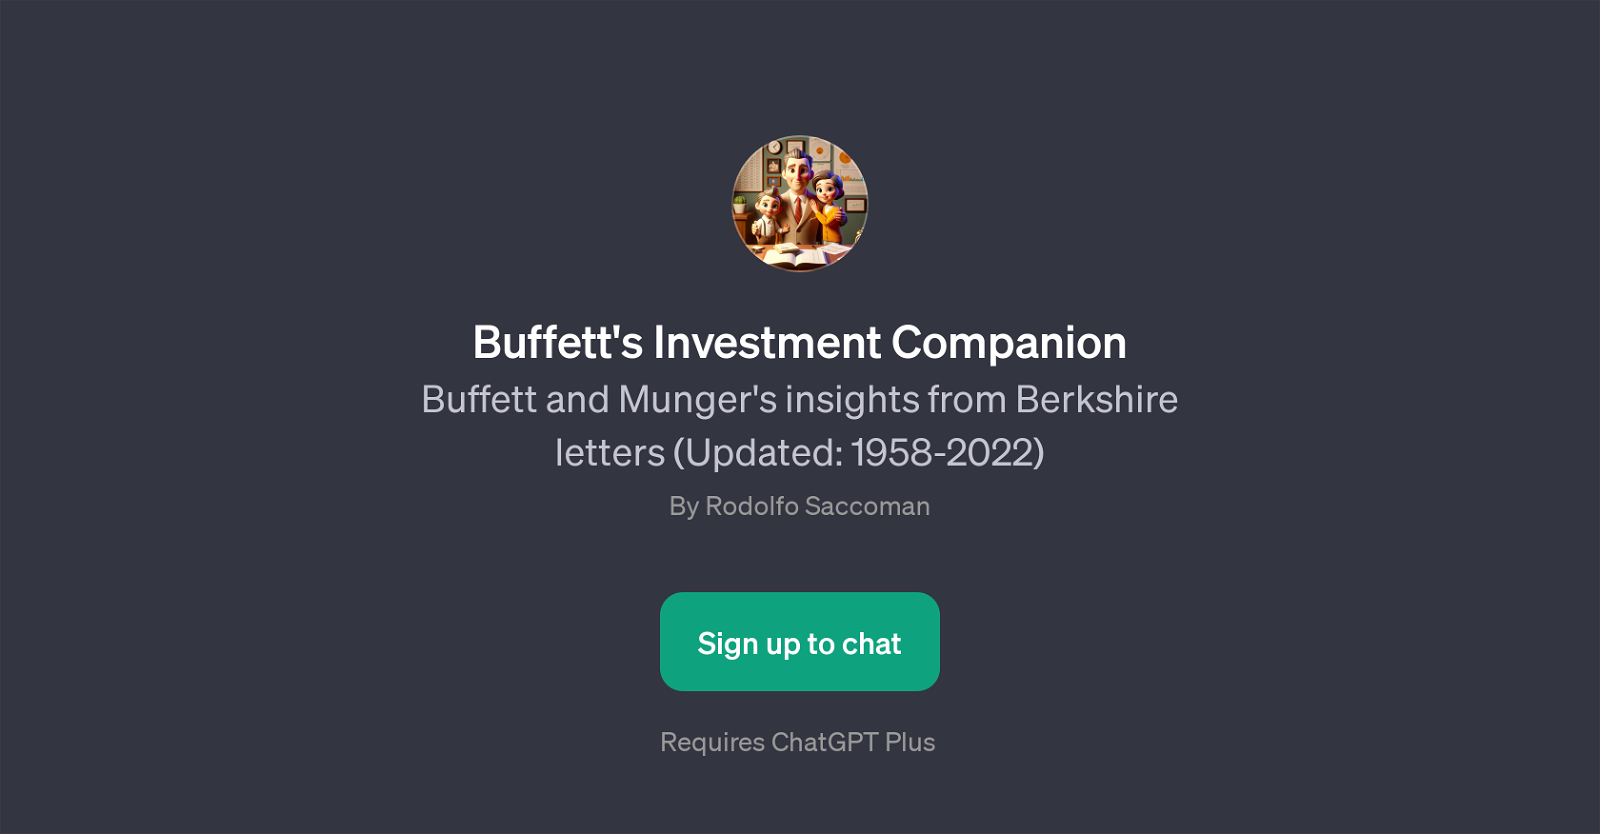 Buffett's Investment Companion website